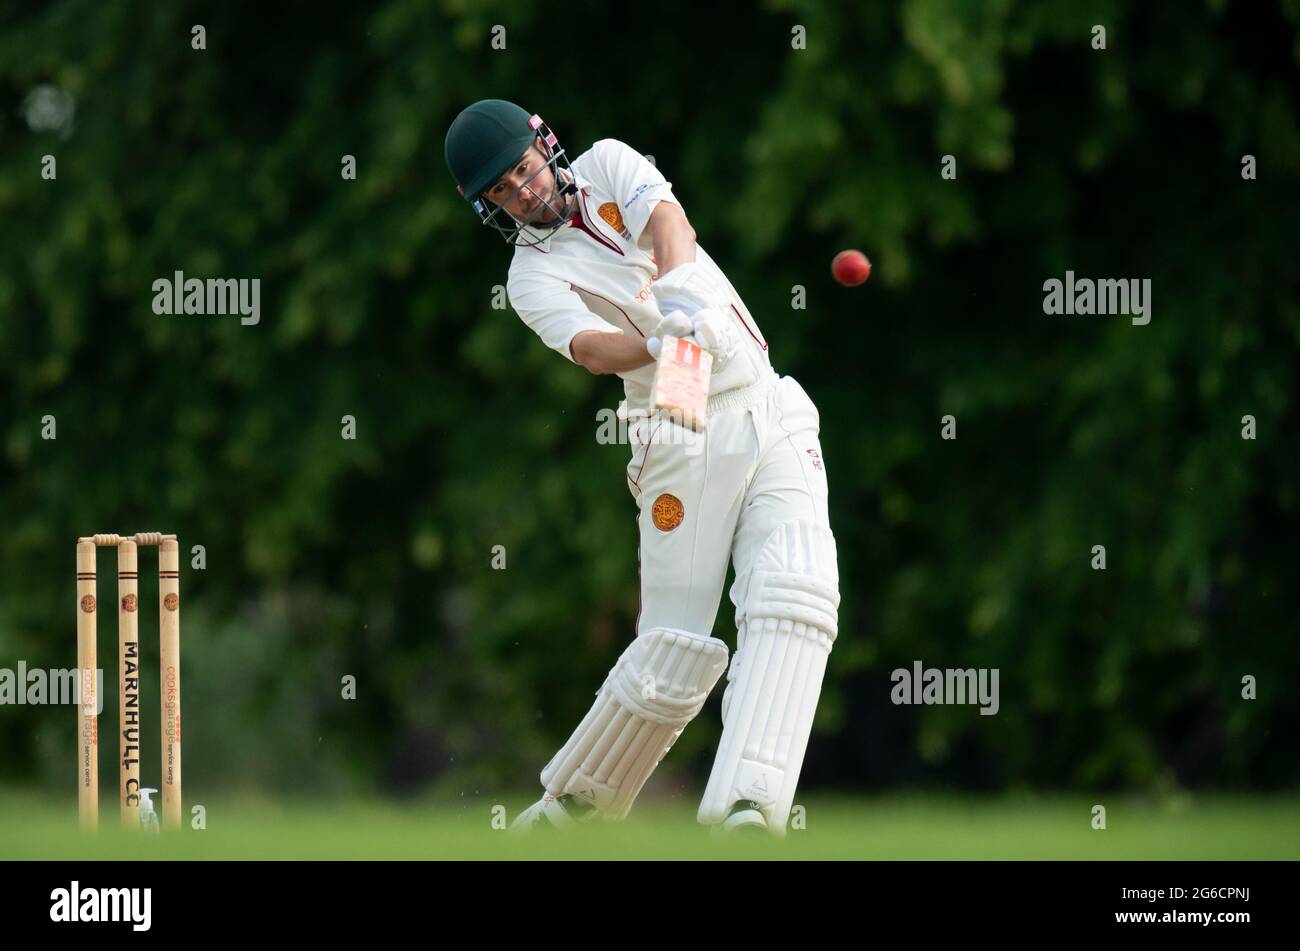 Cricket batsman hitting four runs. Stock Photo